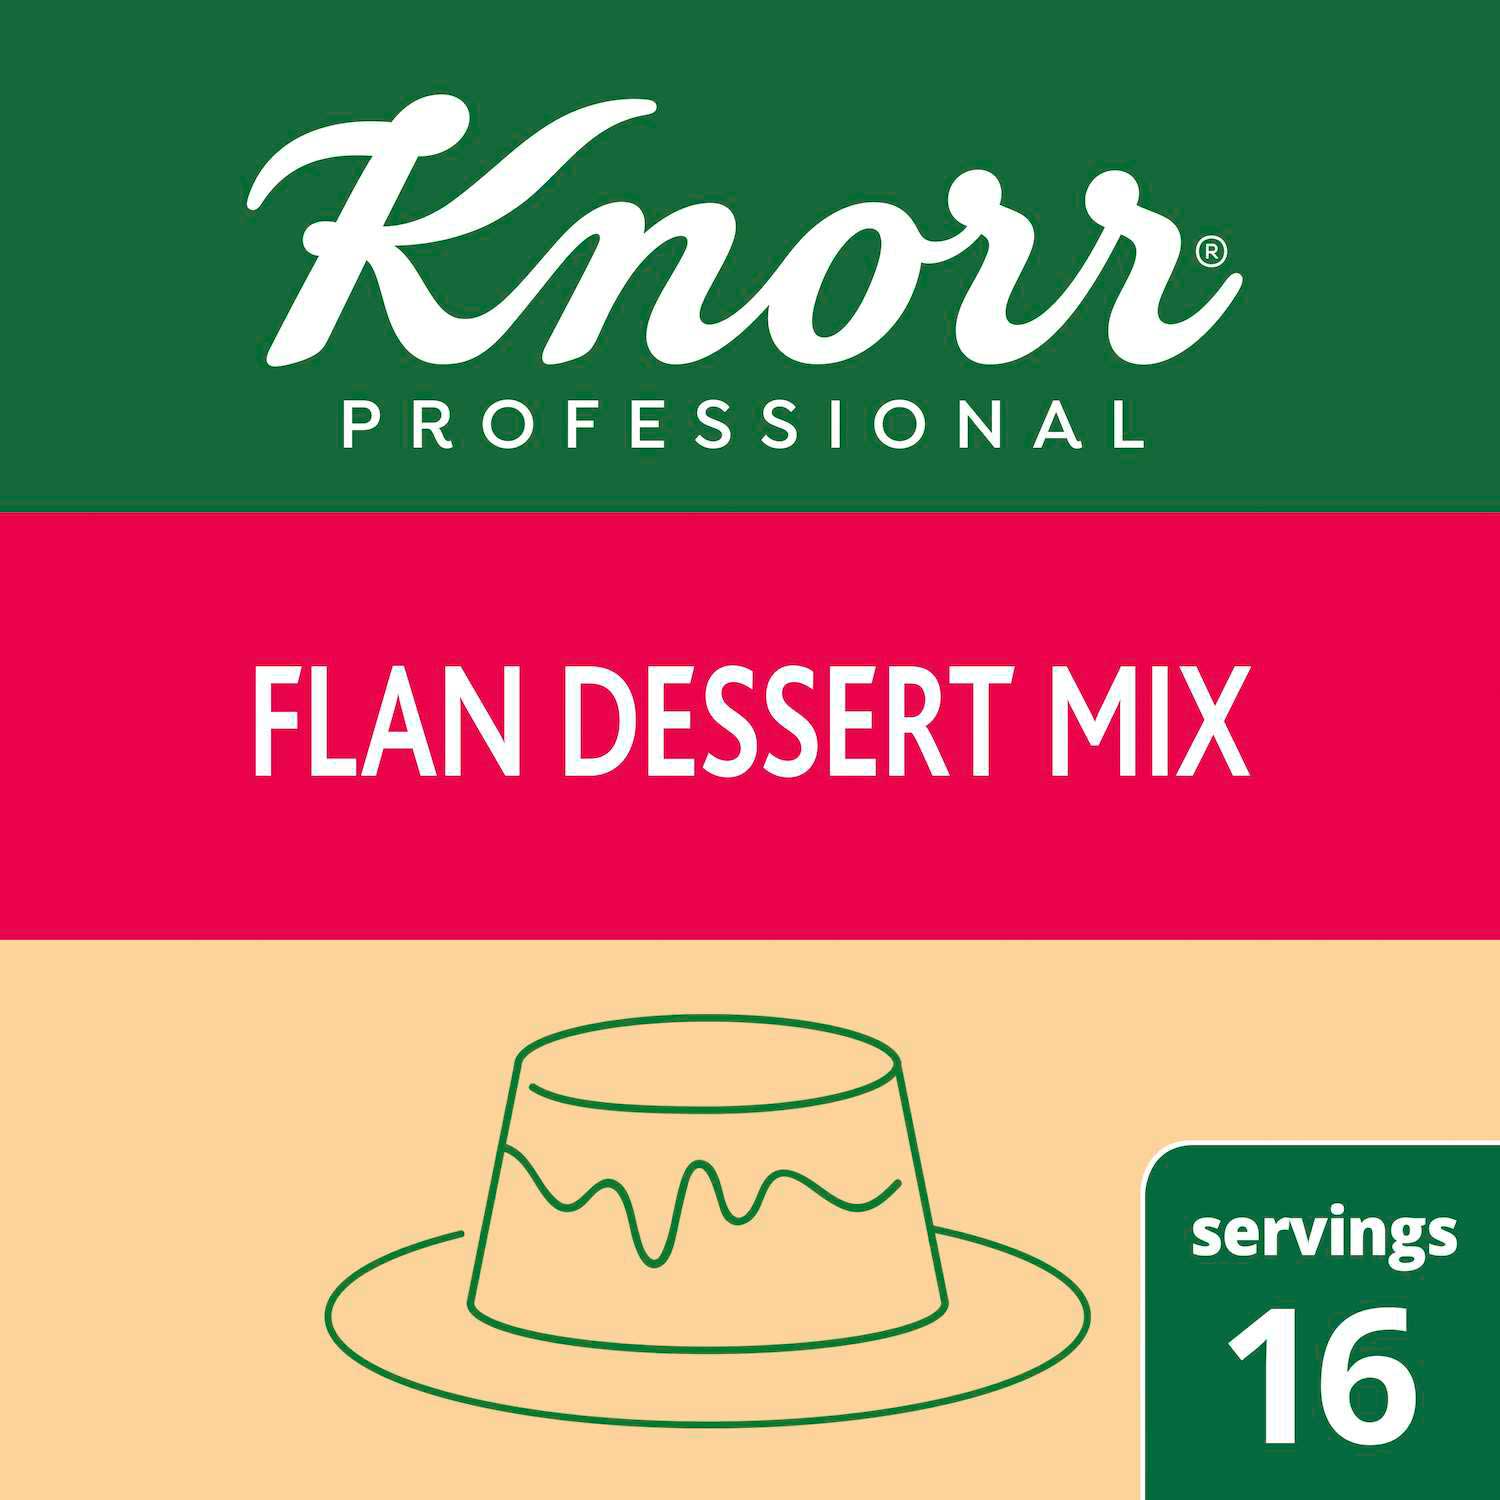 Knorr Professional Creme Caramel Flan Dessert Mix, 8 ounce -- 6 per case